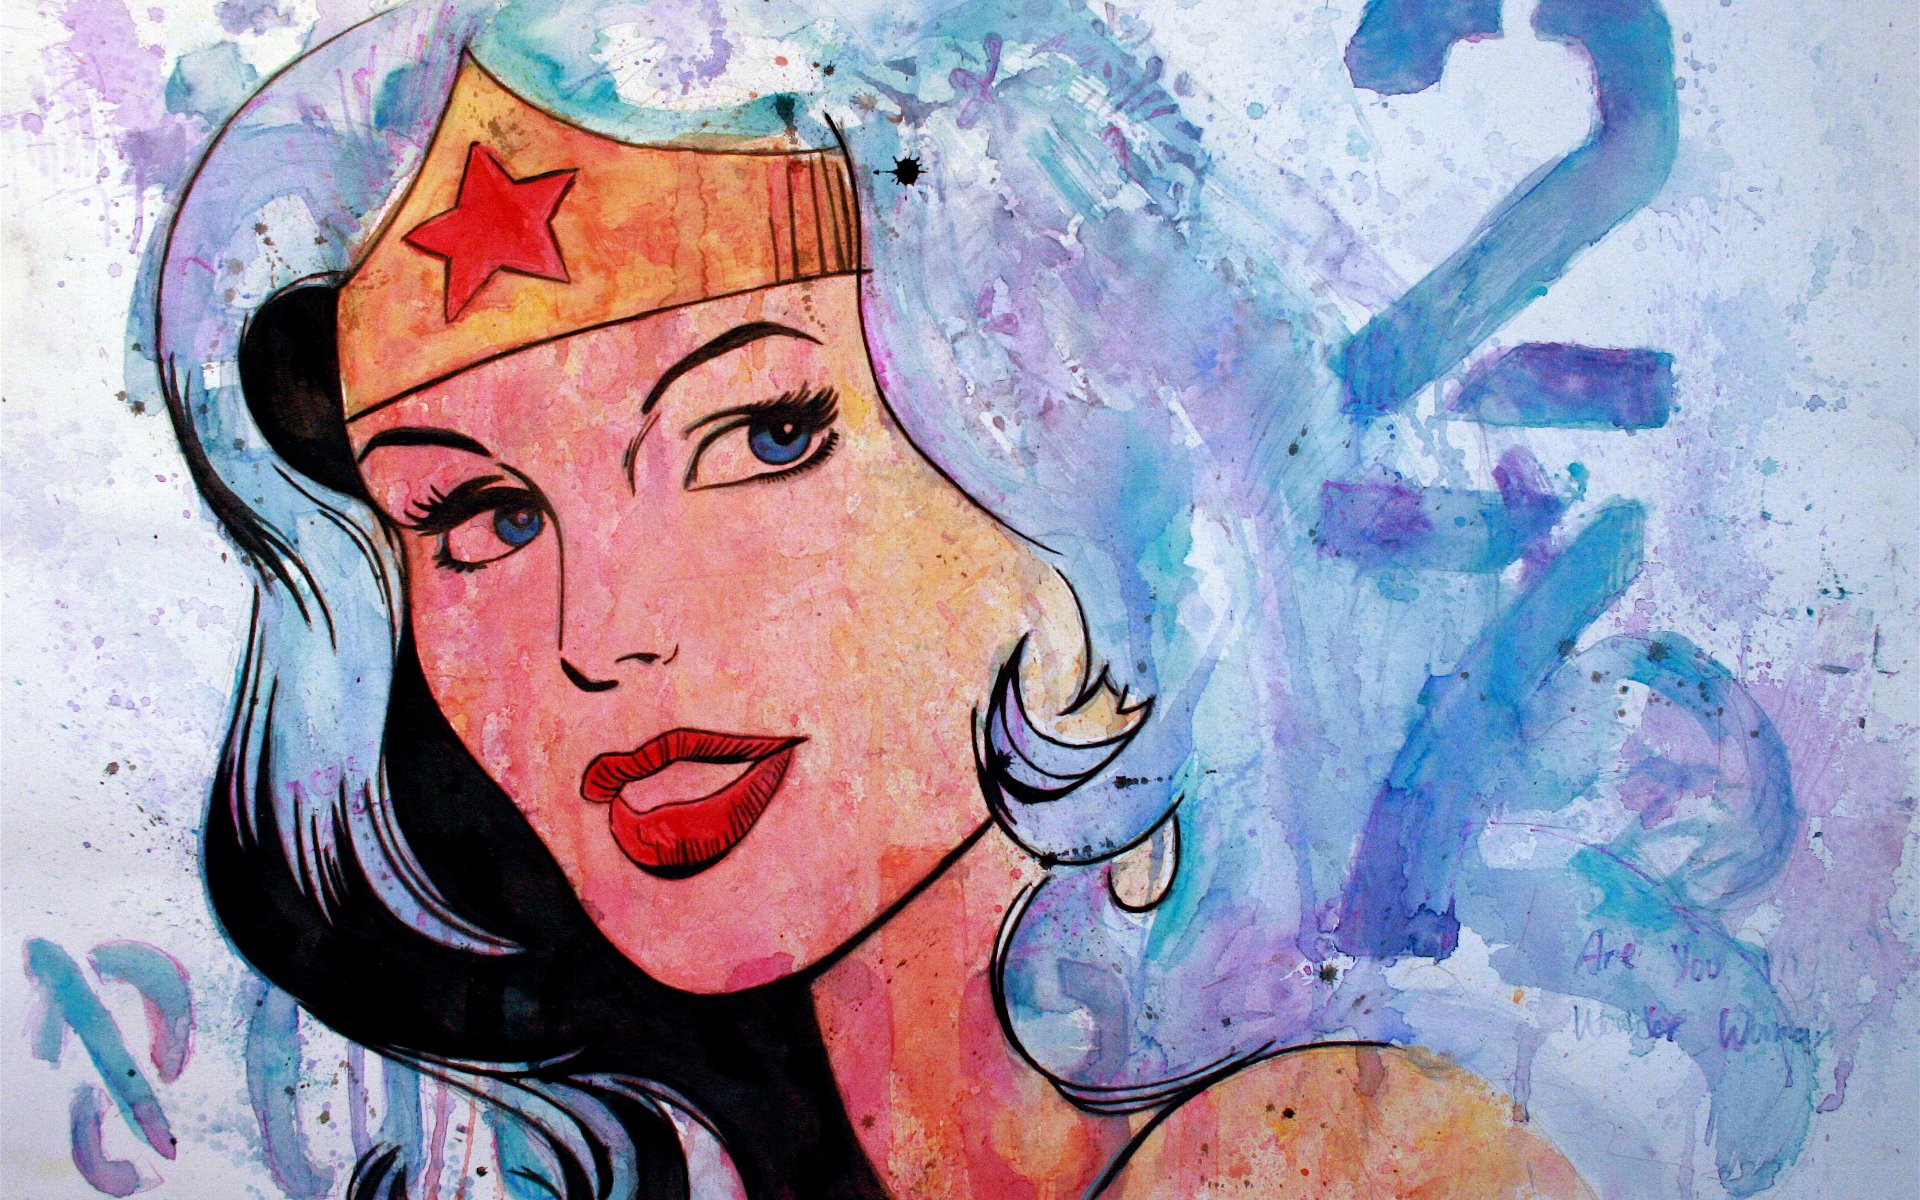 Comics Wonder Woman 4k Ultra Hd Wallpaper